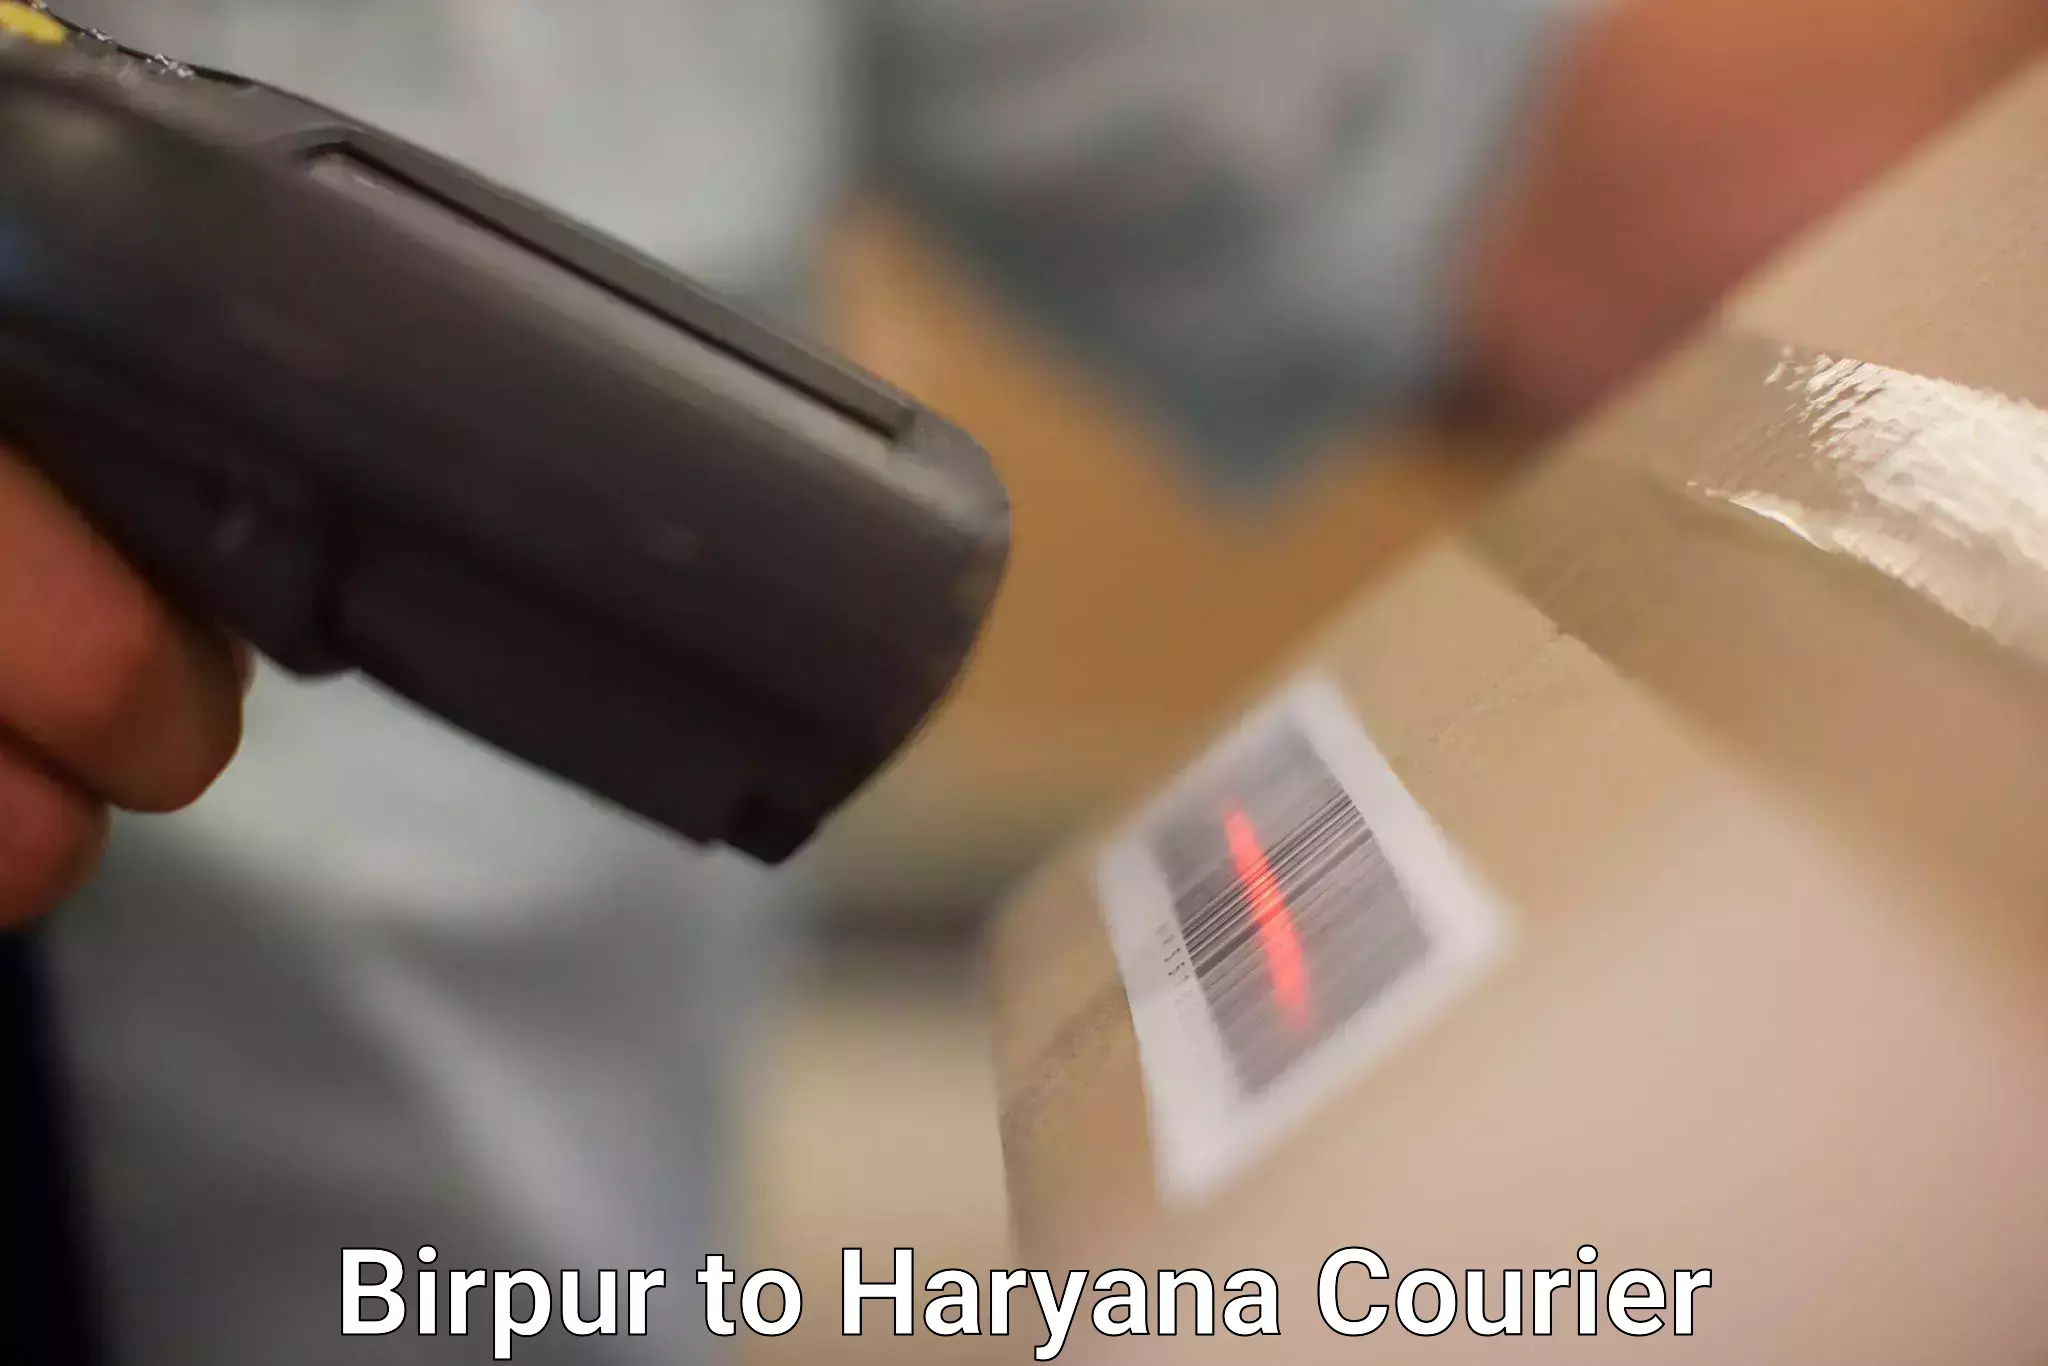 Pharmaceutical courier Birpur to Gurugram